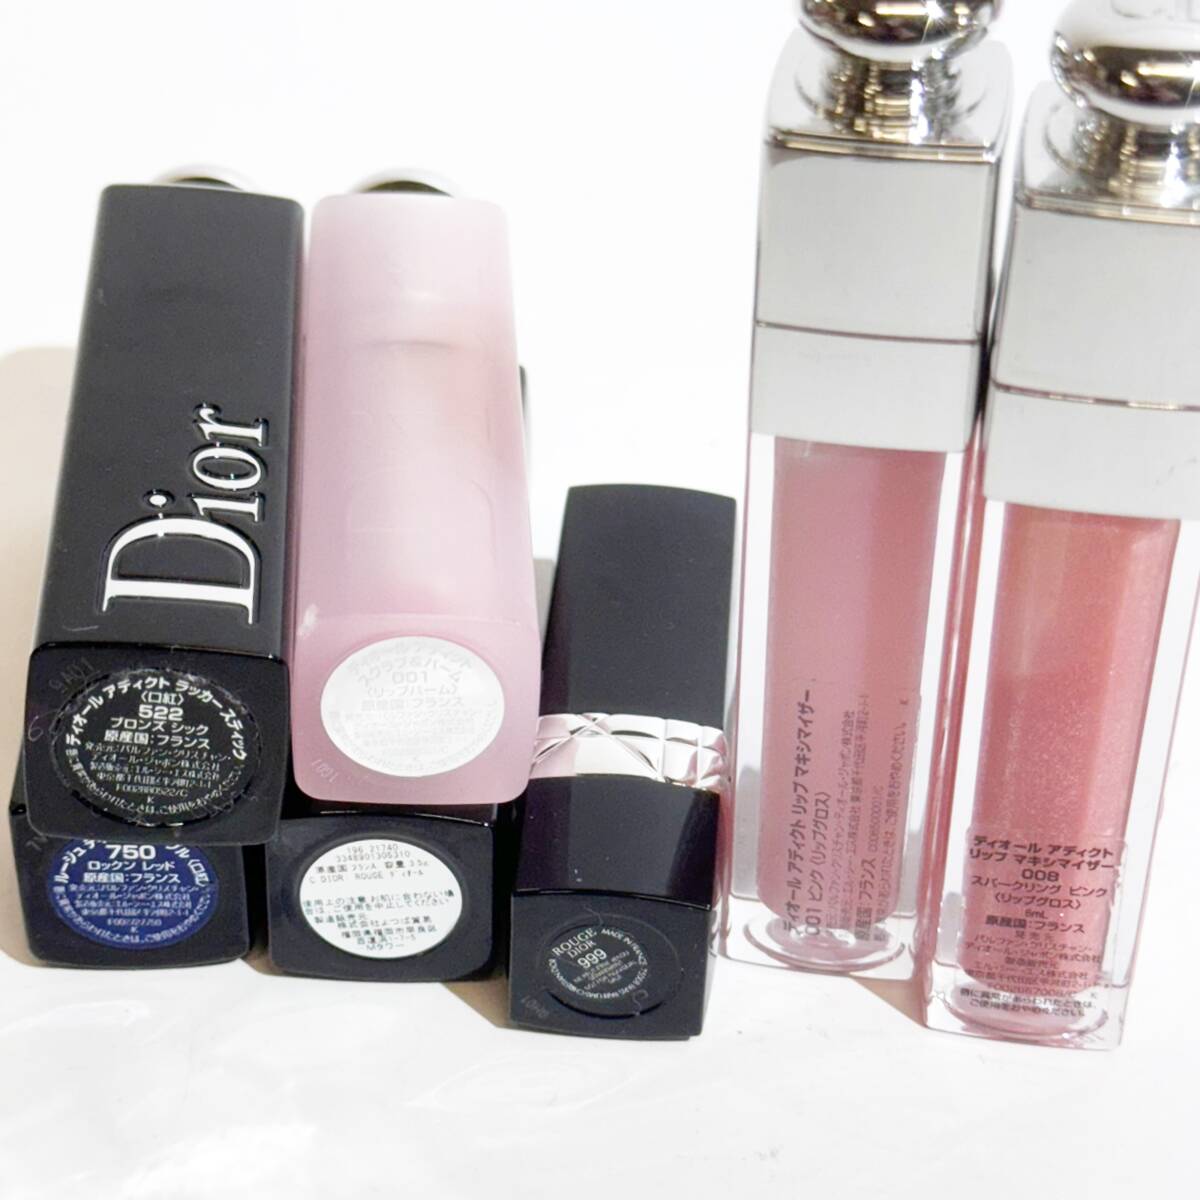  Dior * lipstick, lip gloss 7 pcs set * lip Maxima i The -, Dior Adi k Tracker, rouge Dior 